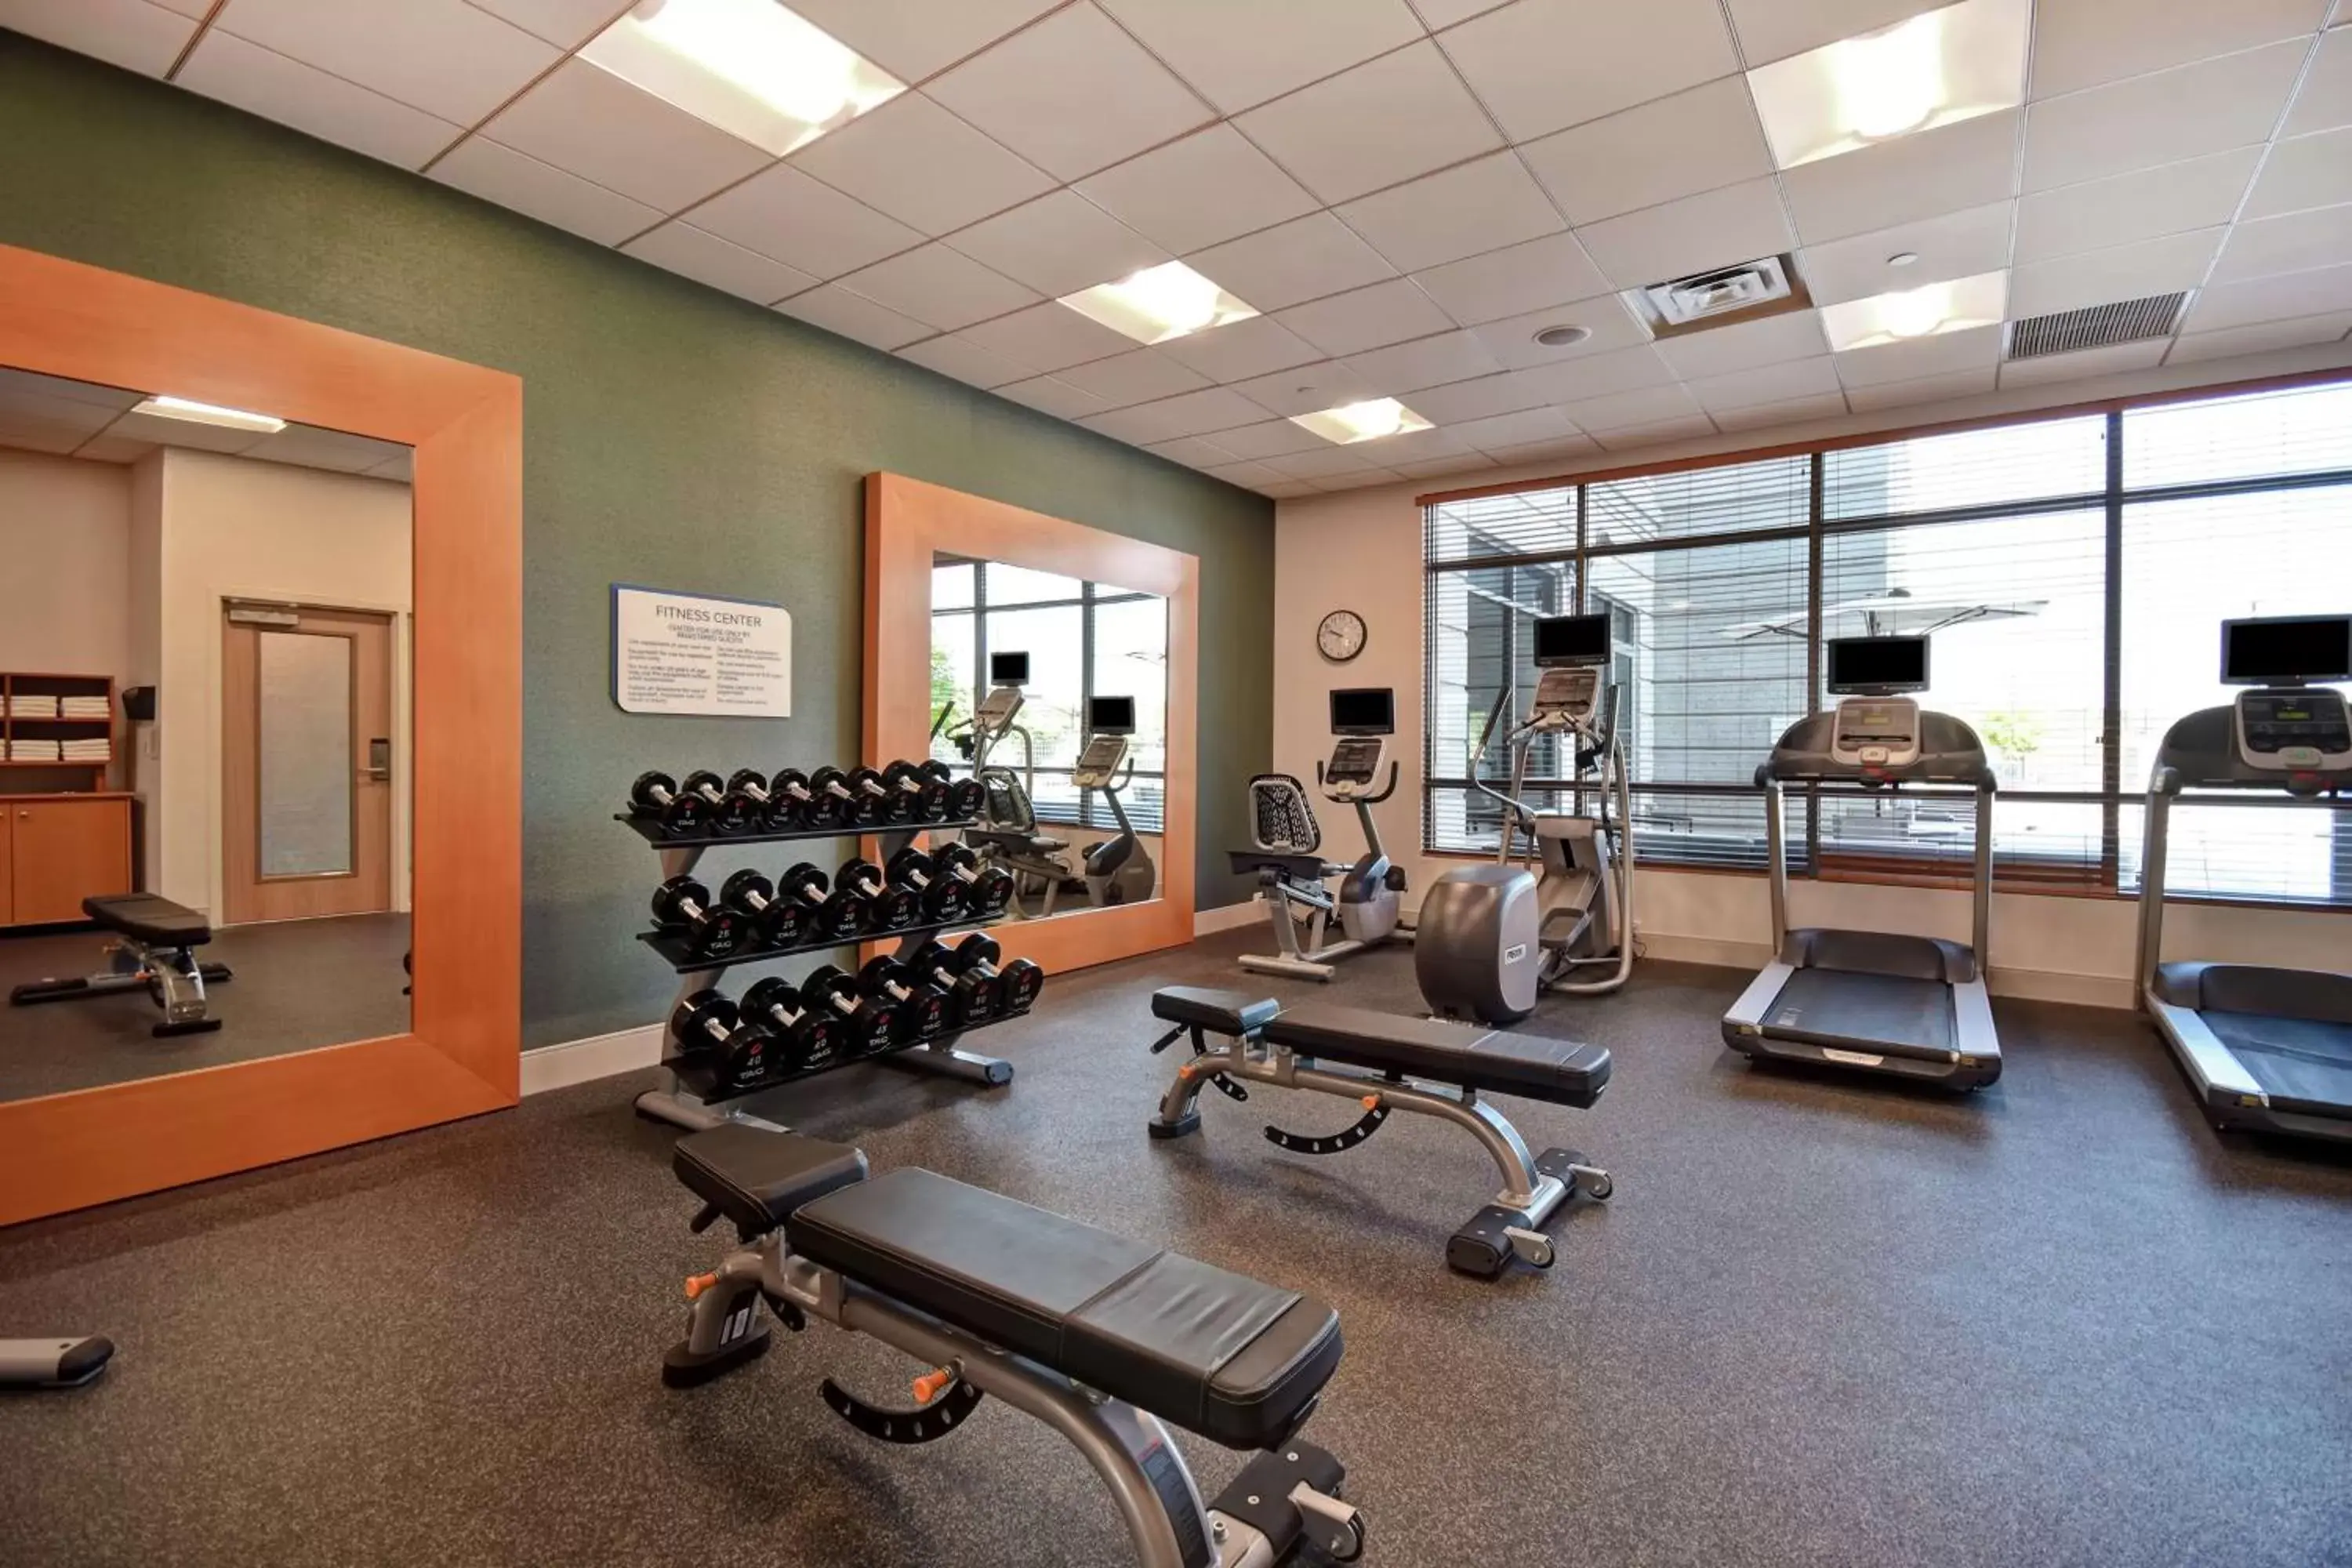 Fitness centre/facilities, Fitness Center/Facilities in Hilton Garden Inn Jackson